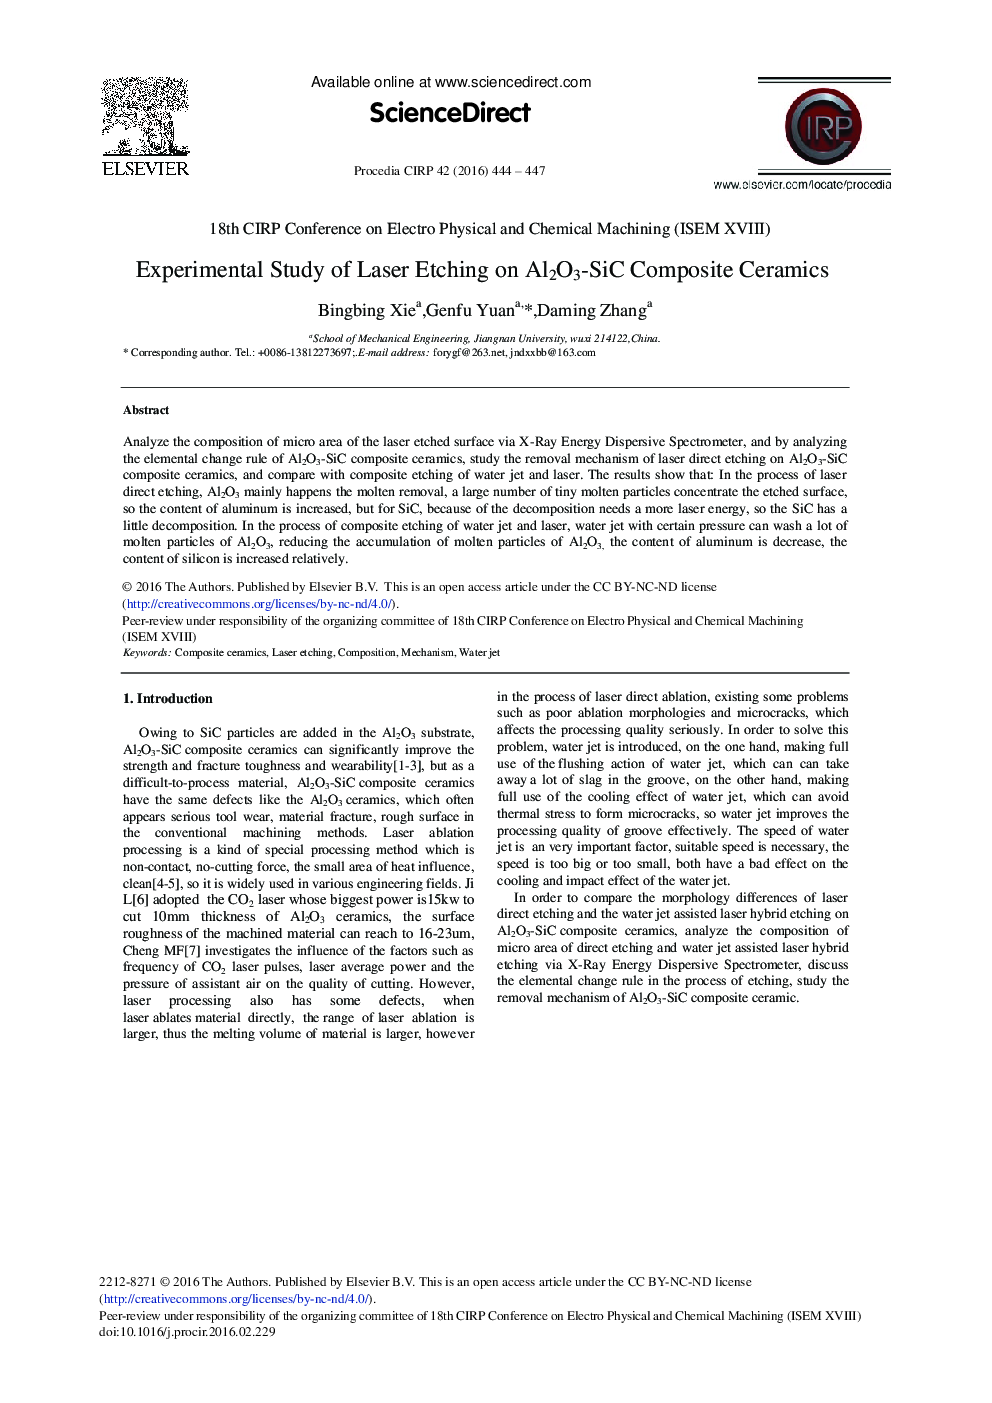 Experimental Study of Laser Etching on Al2O3-SiC Composite Ceramics 